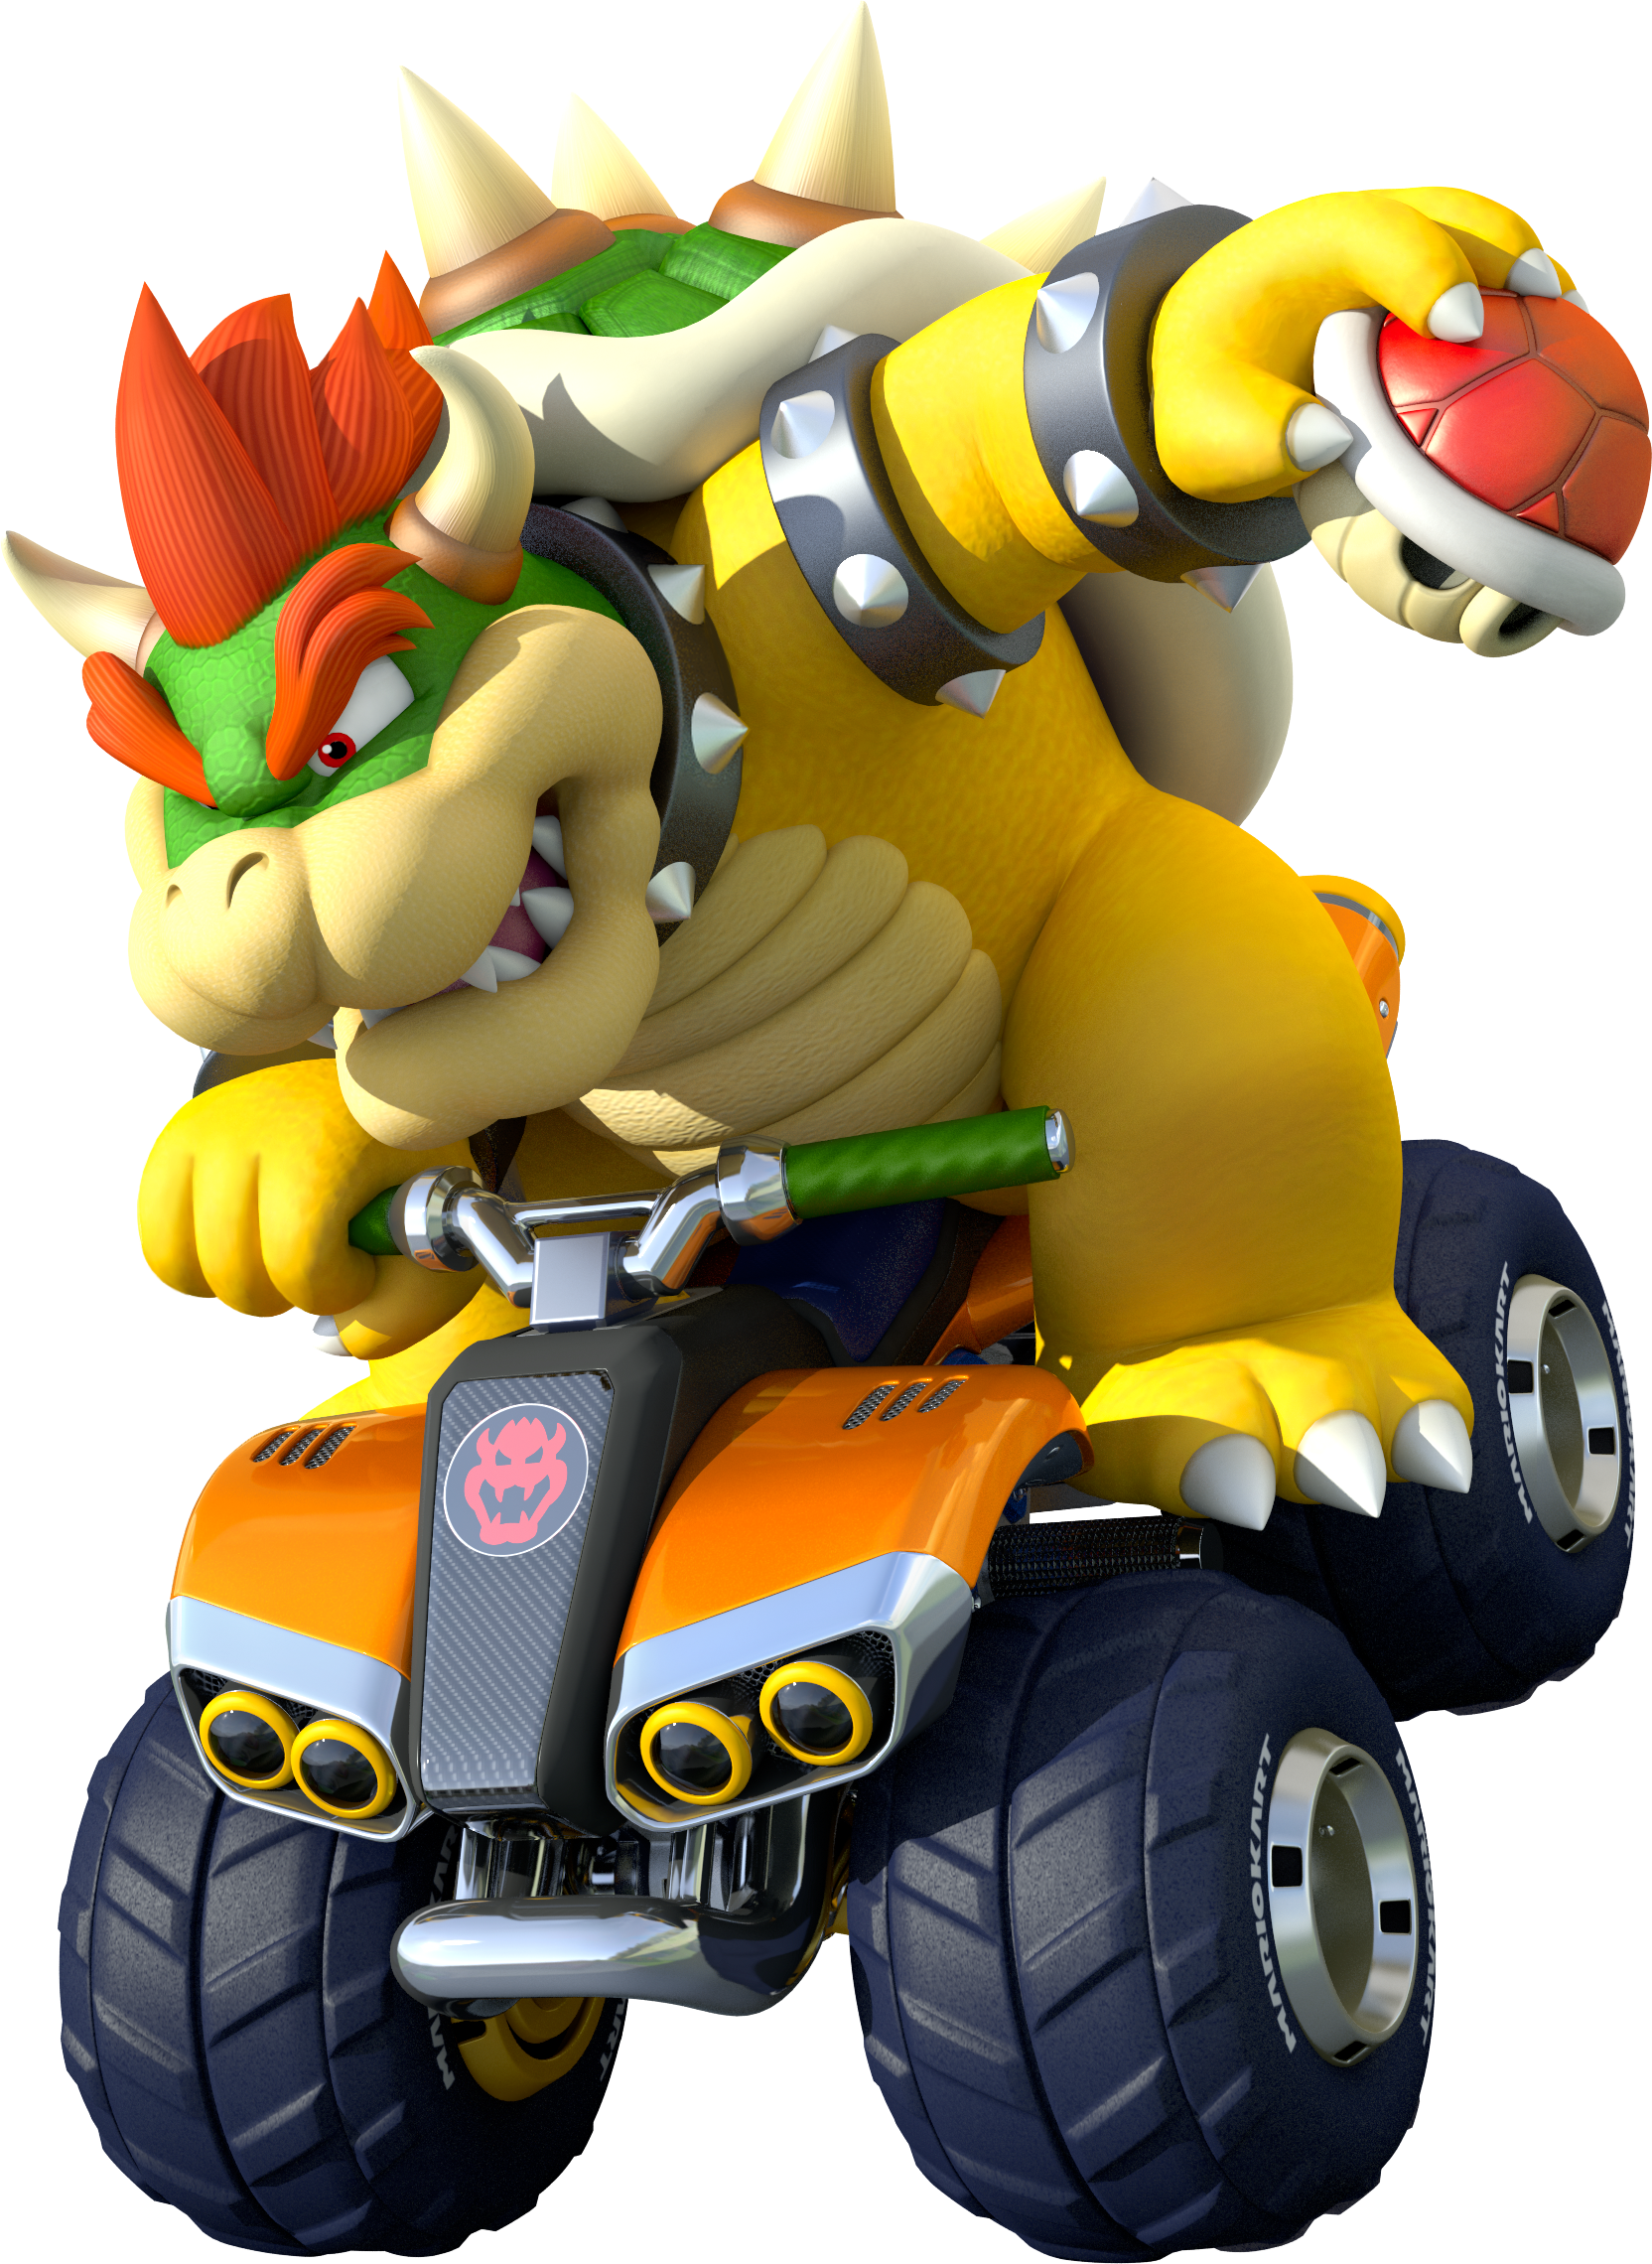 Mario Kart Wii w/ Included Wheel